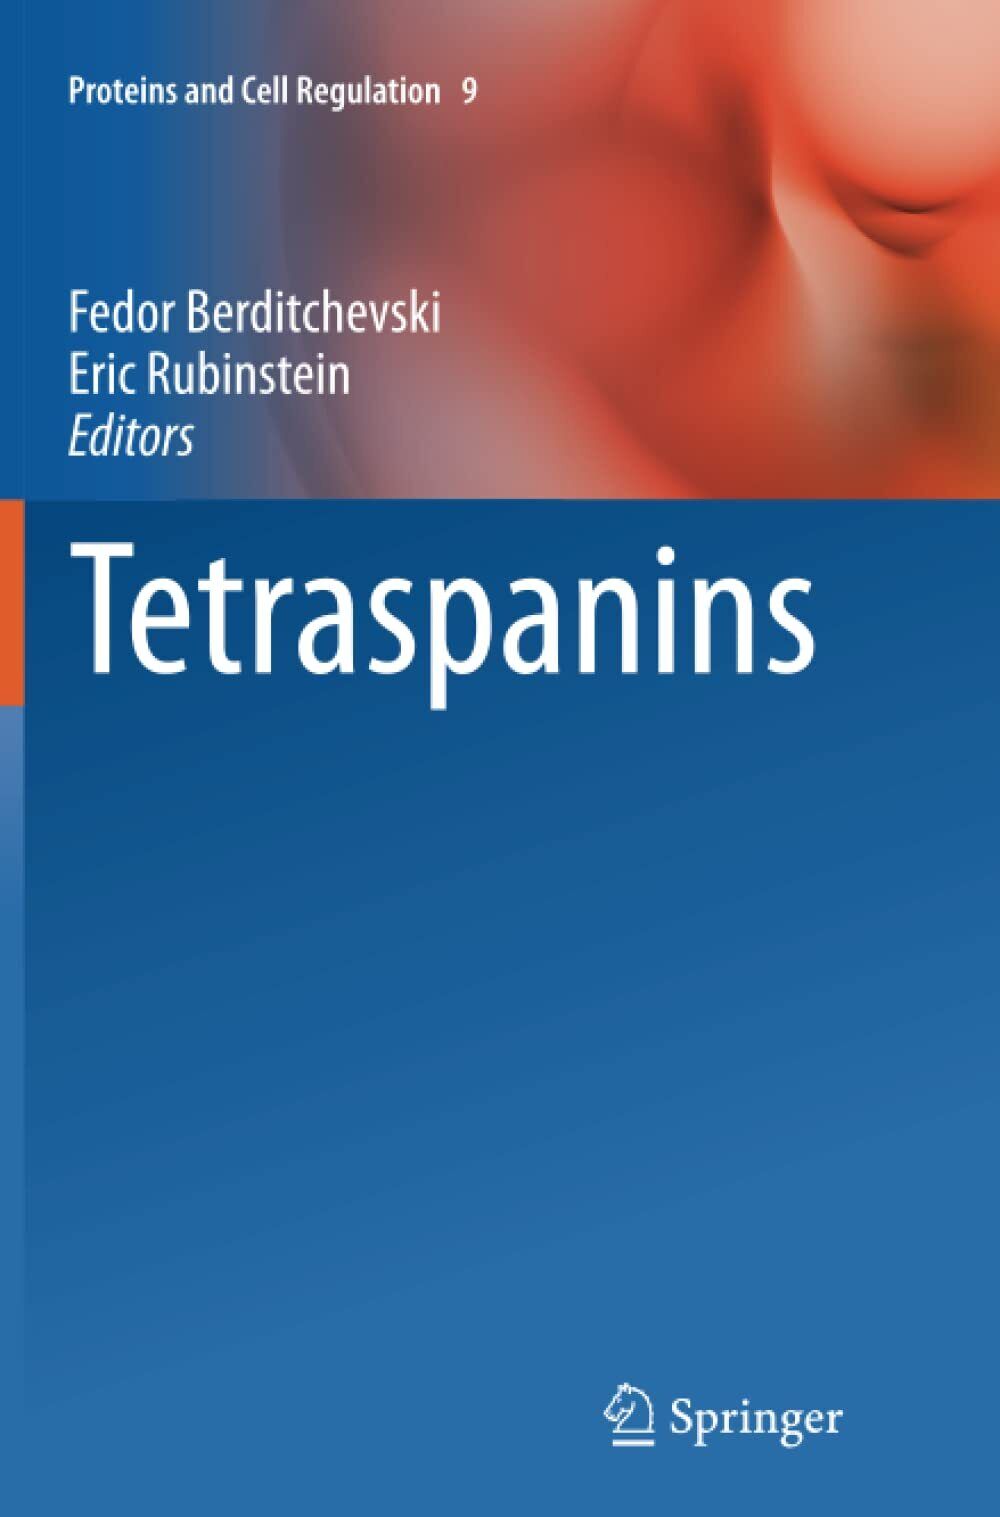 Tetraspanins - Fedor Berditchevski - Springer, 2015